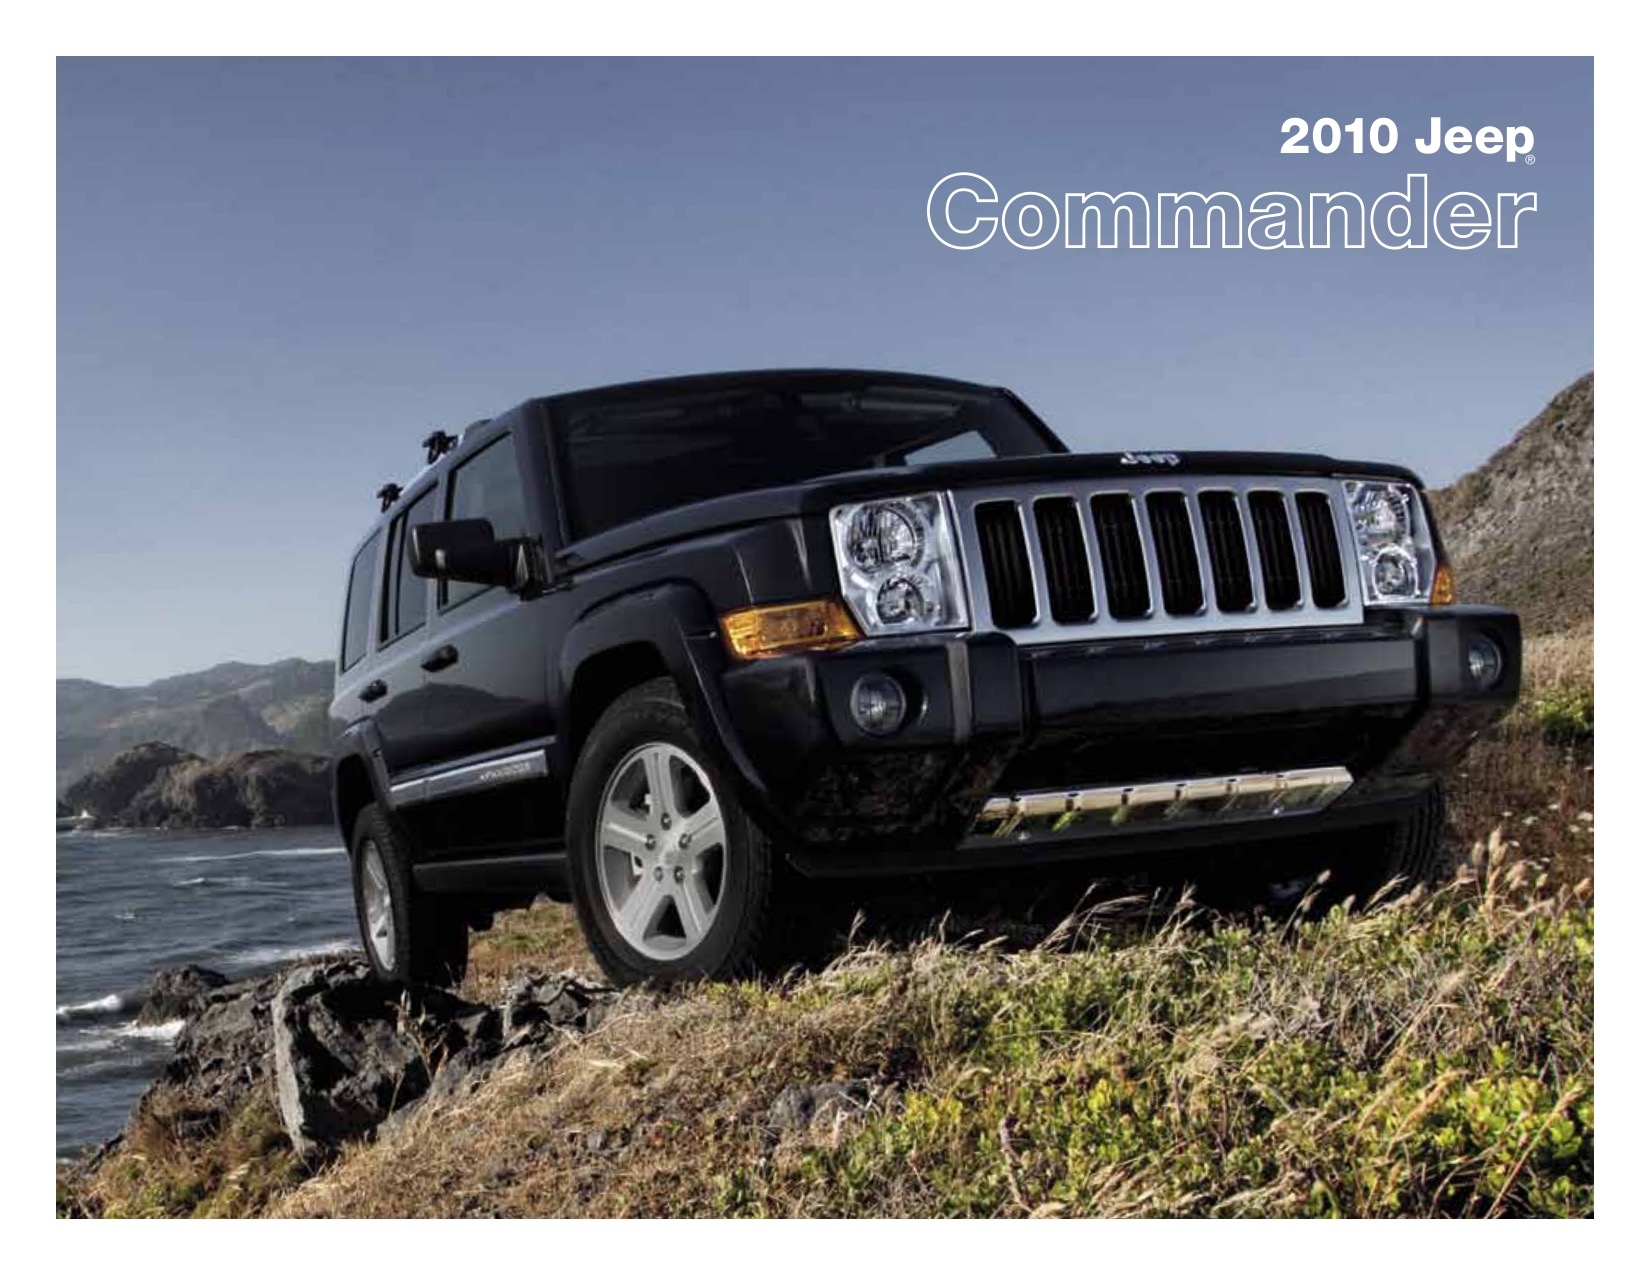 2010 Jeep Commander Brochure